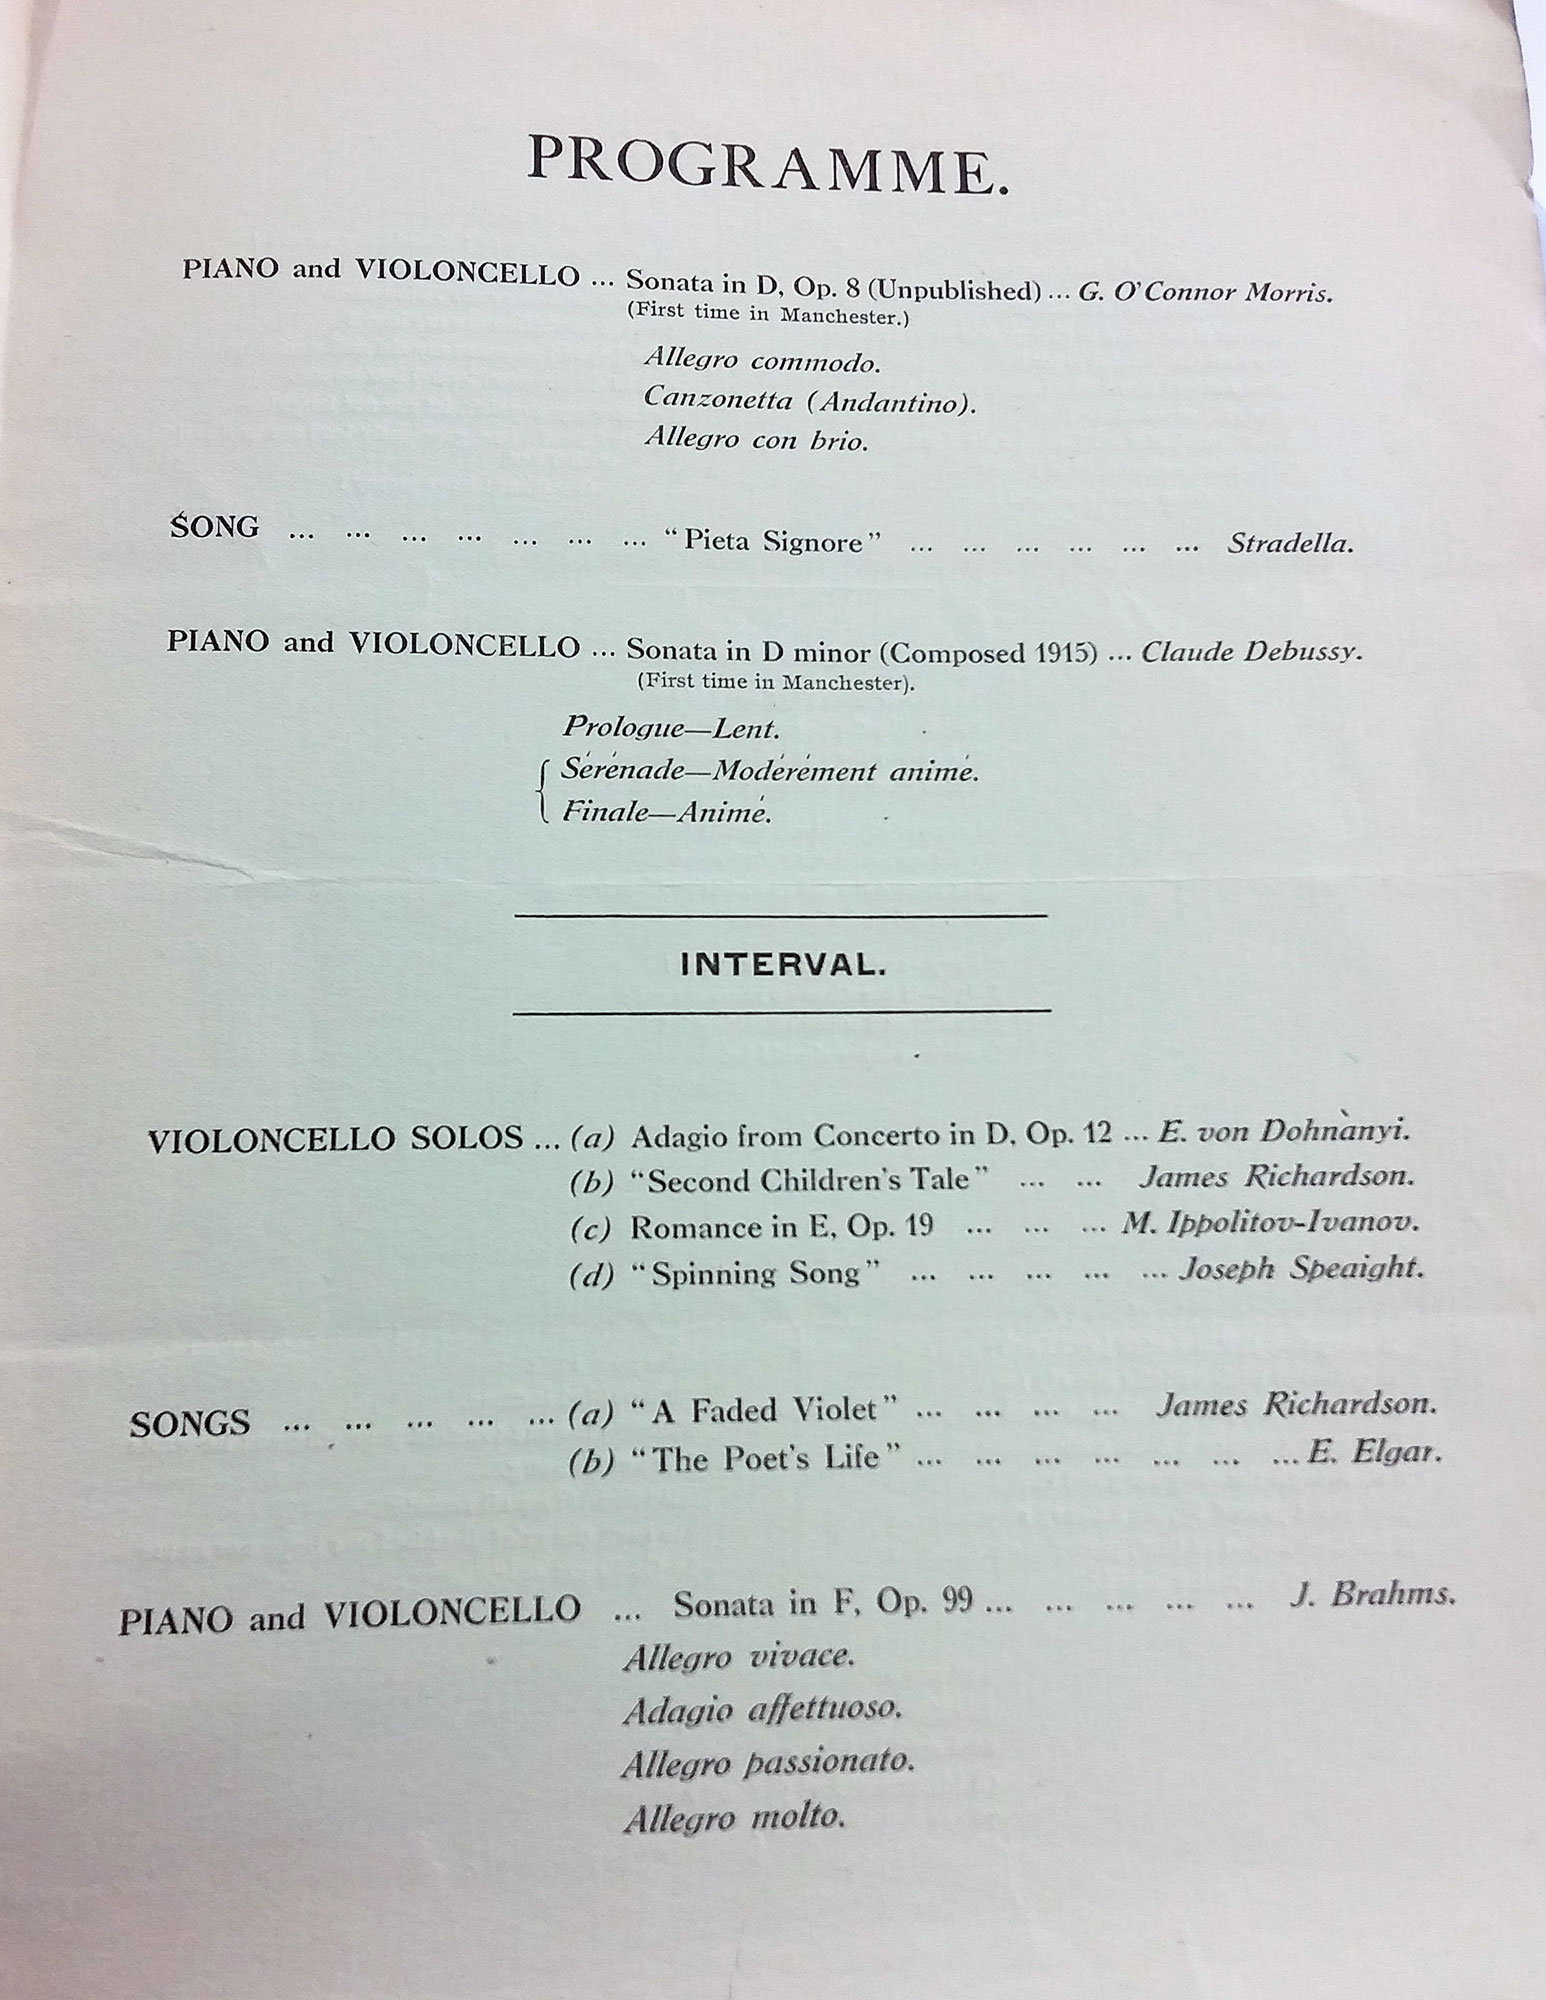 Violoncello Recital Oct 9th 1916 Memorial Hall programme